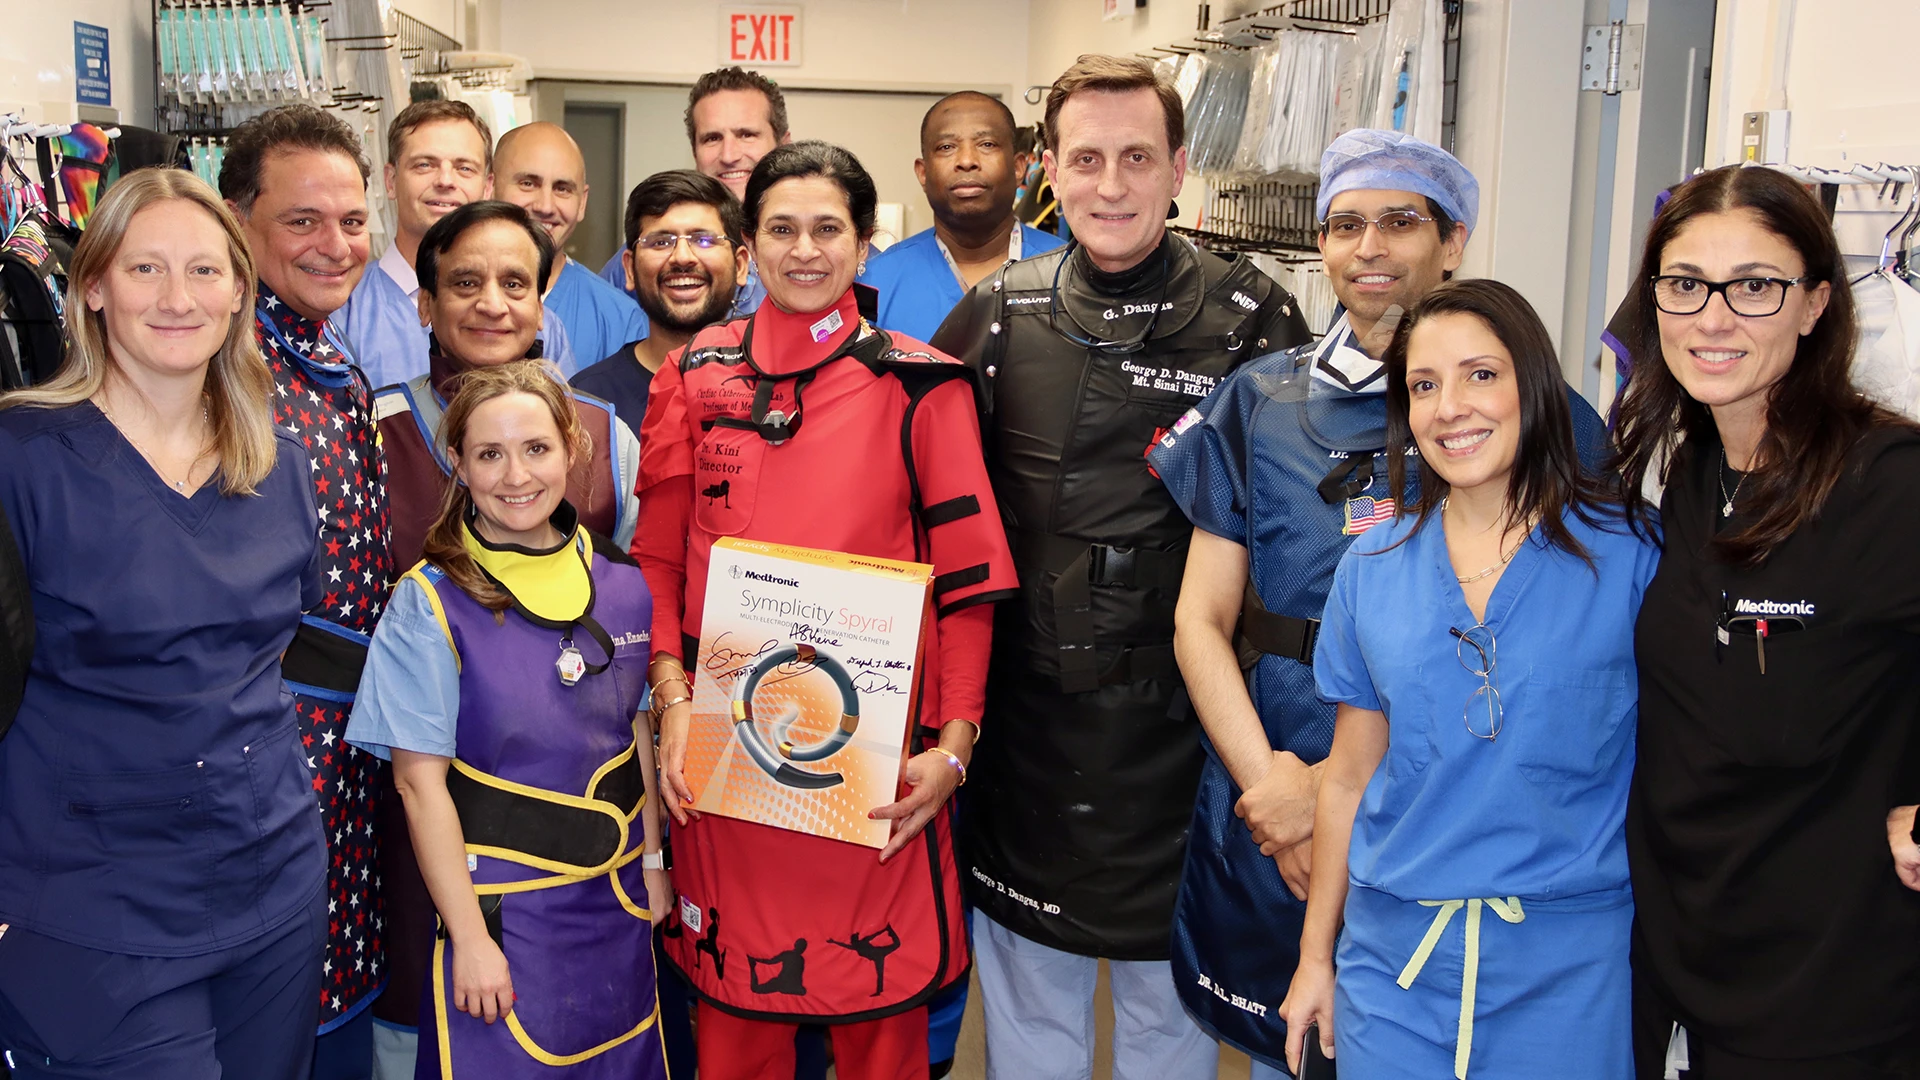 The team performing the Symplicity Spyral procedure included Prakash Krishnan, MD, Samin K. Sharma, MD, Annapoorna S. Kini, MD, George Dangas, MD, PhD, Deepak L. Bhatt, MD, MPH, and staff of The Mount Sinai Hospital Cardiac Catheterization Laboratory. 